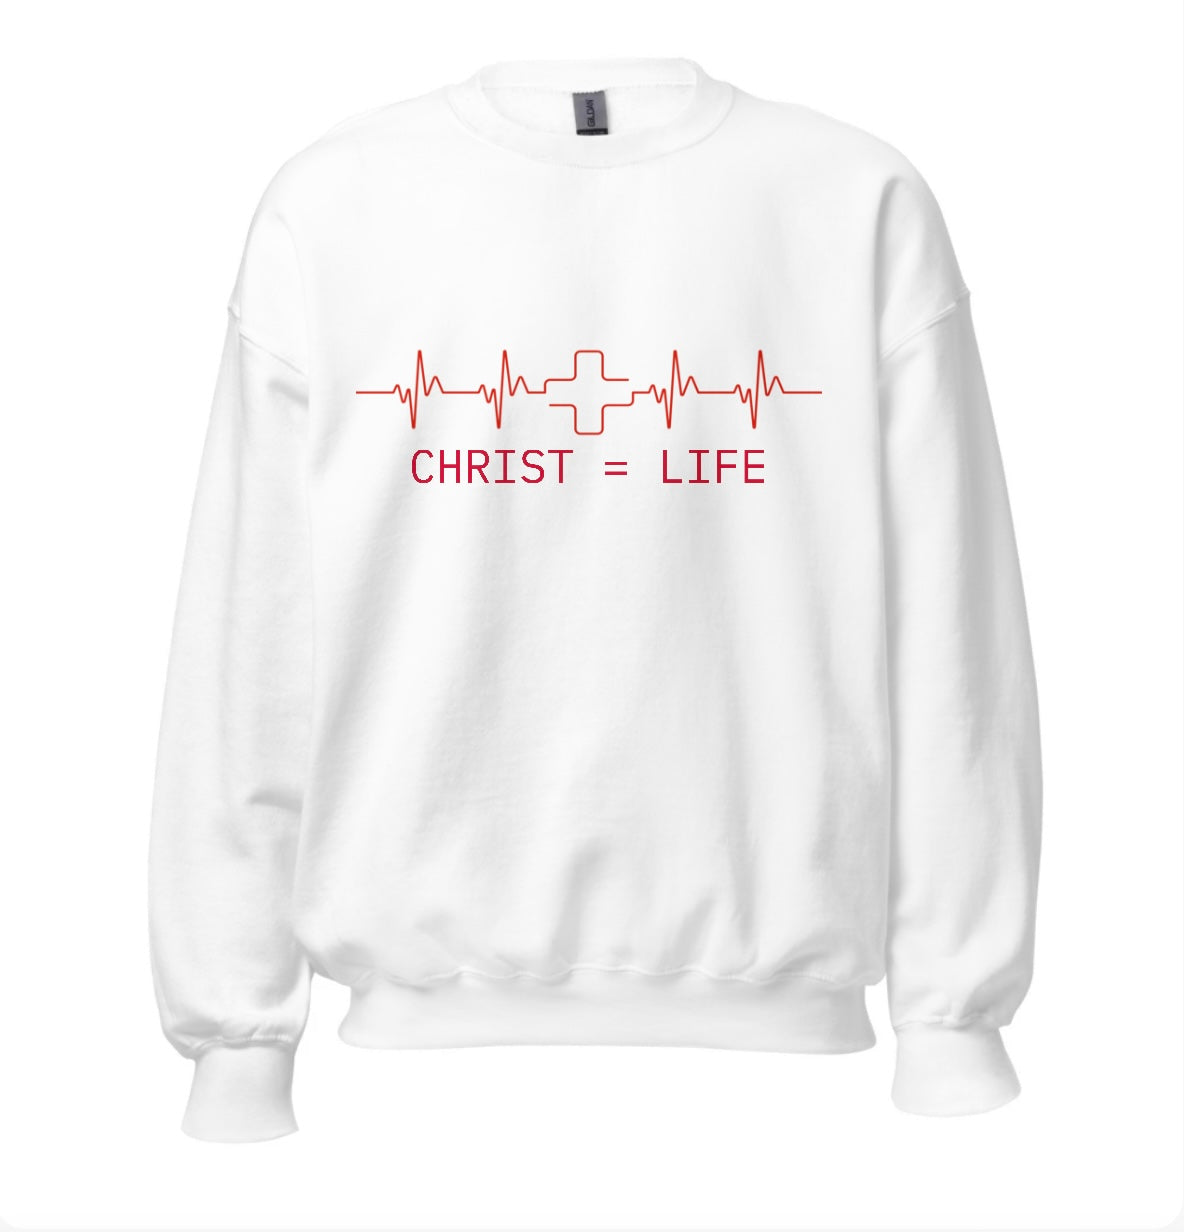 Christ Equals Life sweatshirt